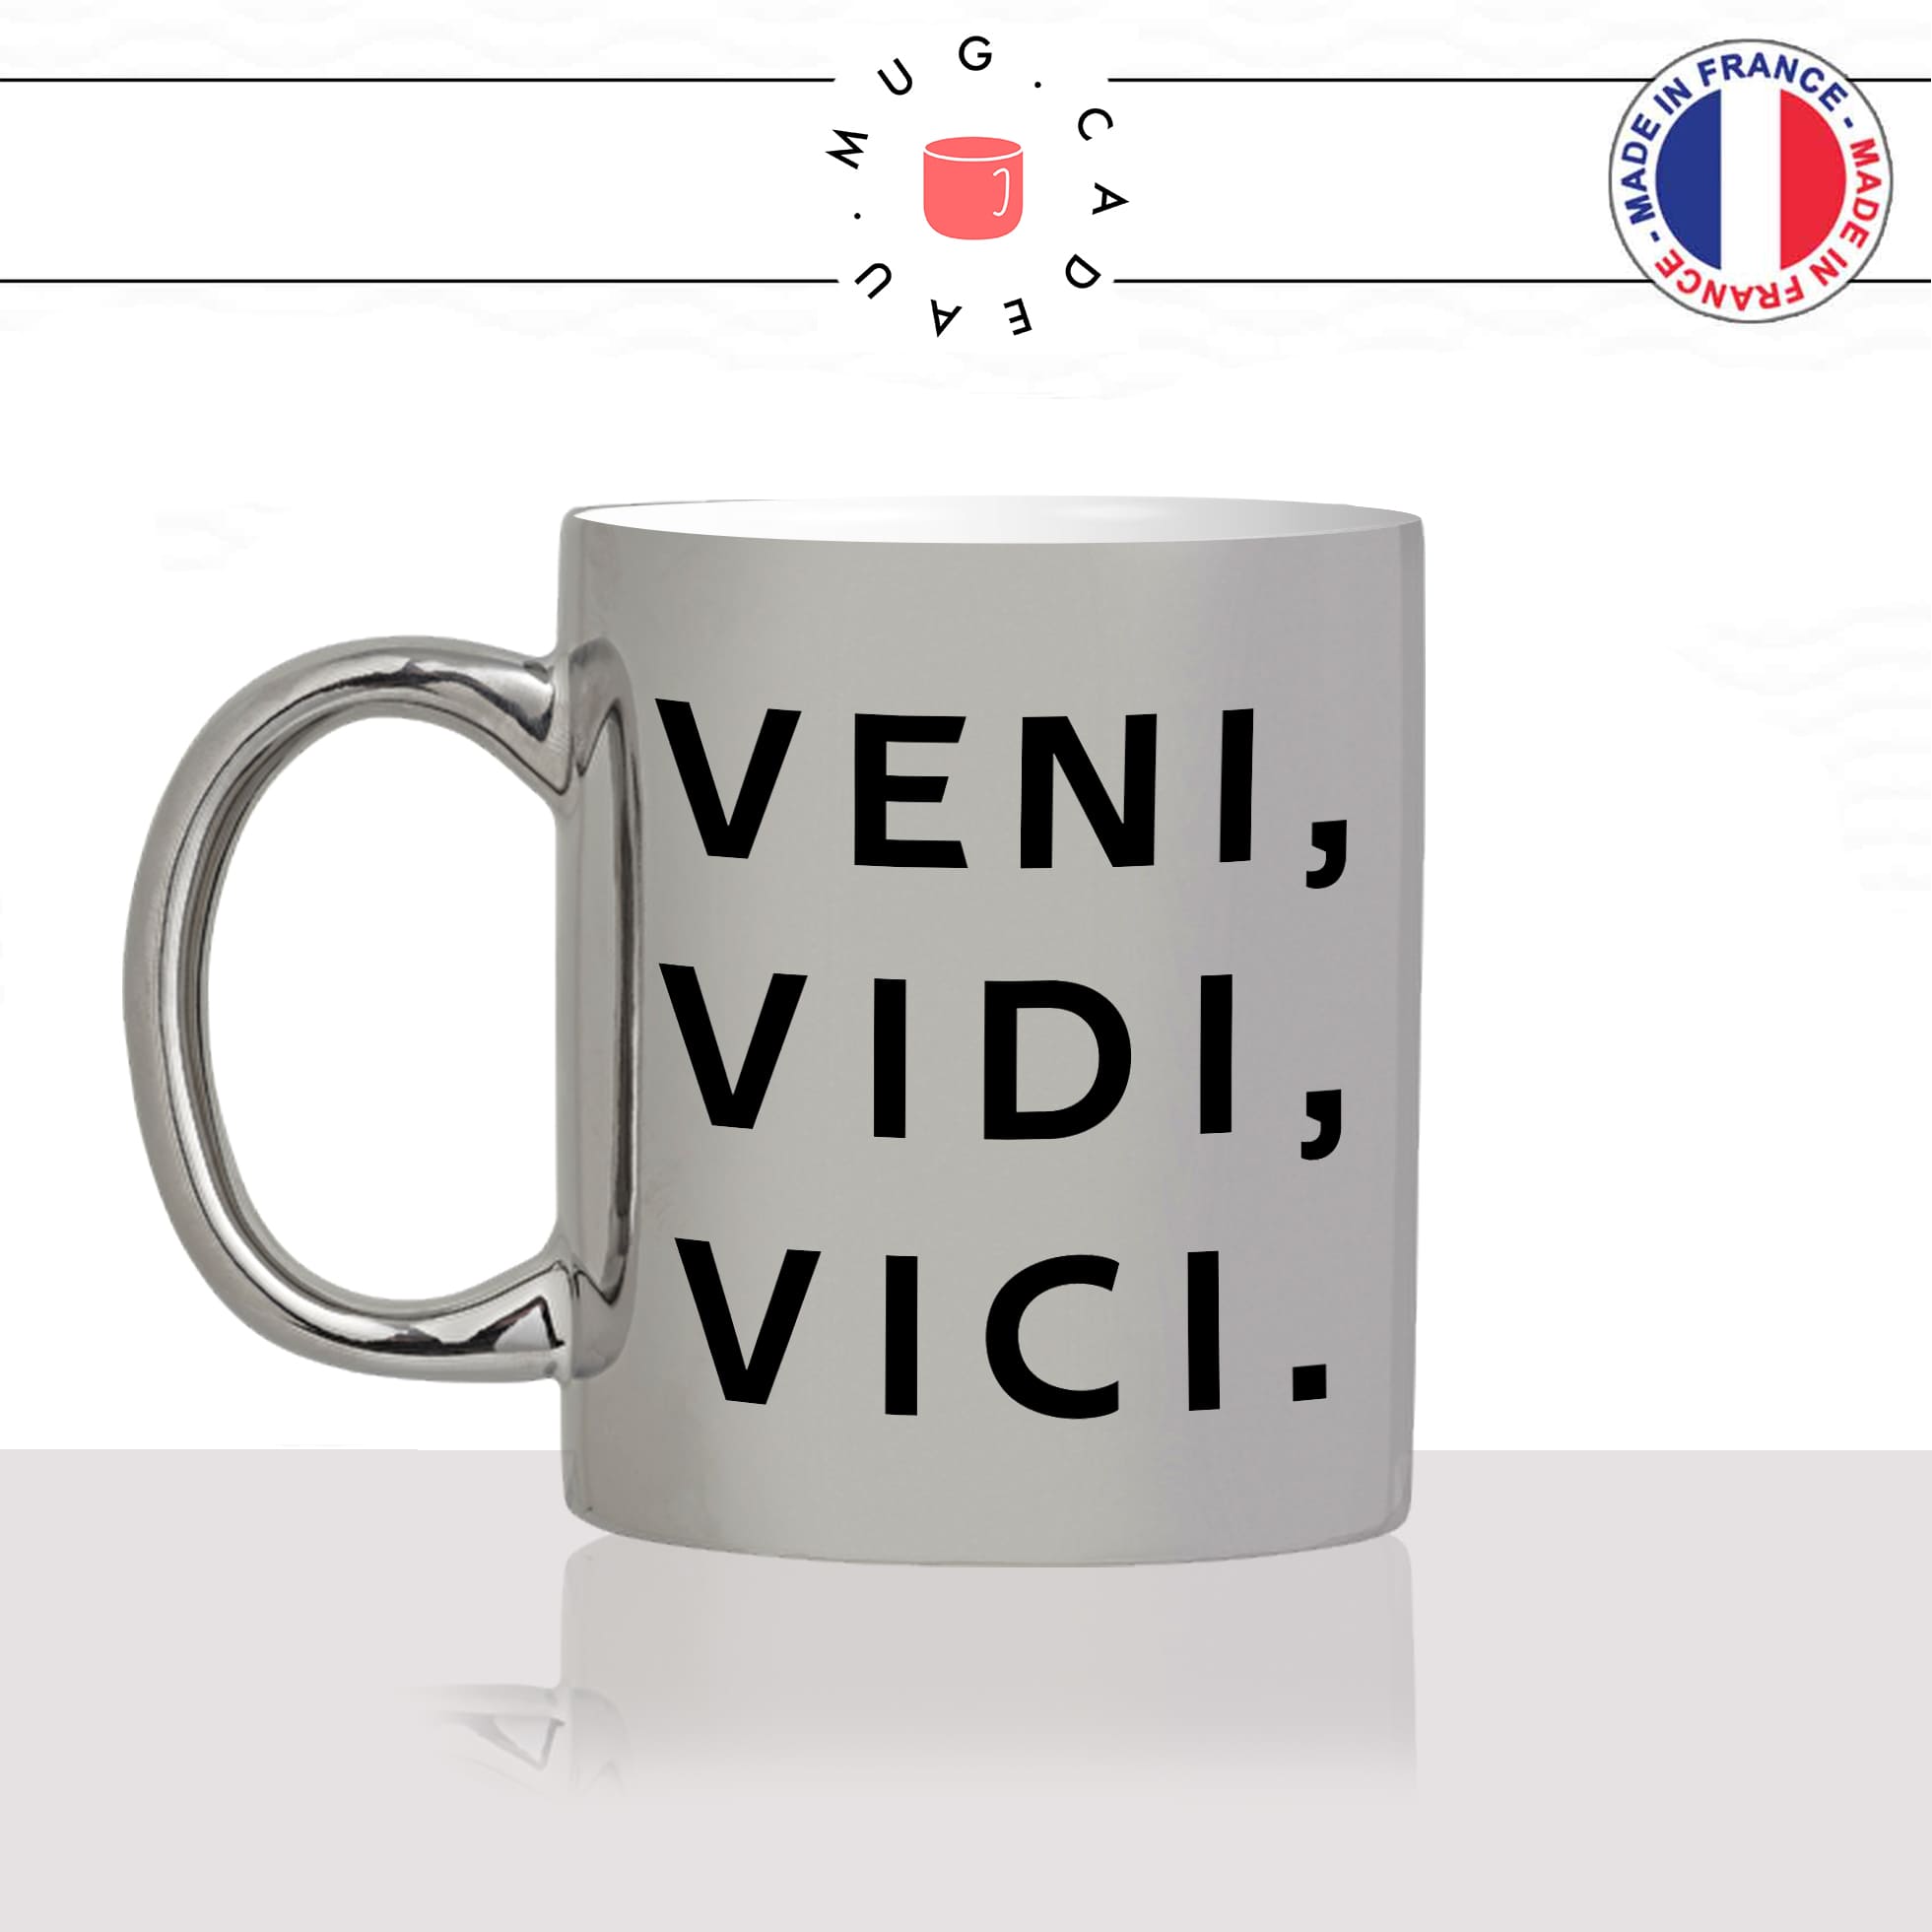 mug-tasse-argenté-argent-gris-silver-veni-vidi-vici-napoleon-latin-citataion-guerre-venu-vu-vaincu-humour-fun-idée-cadeau-originale-cool